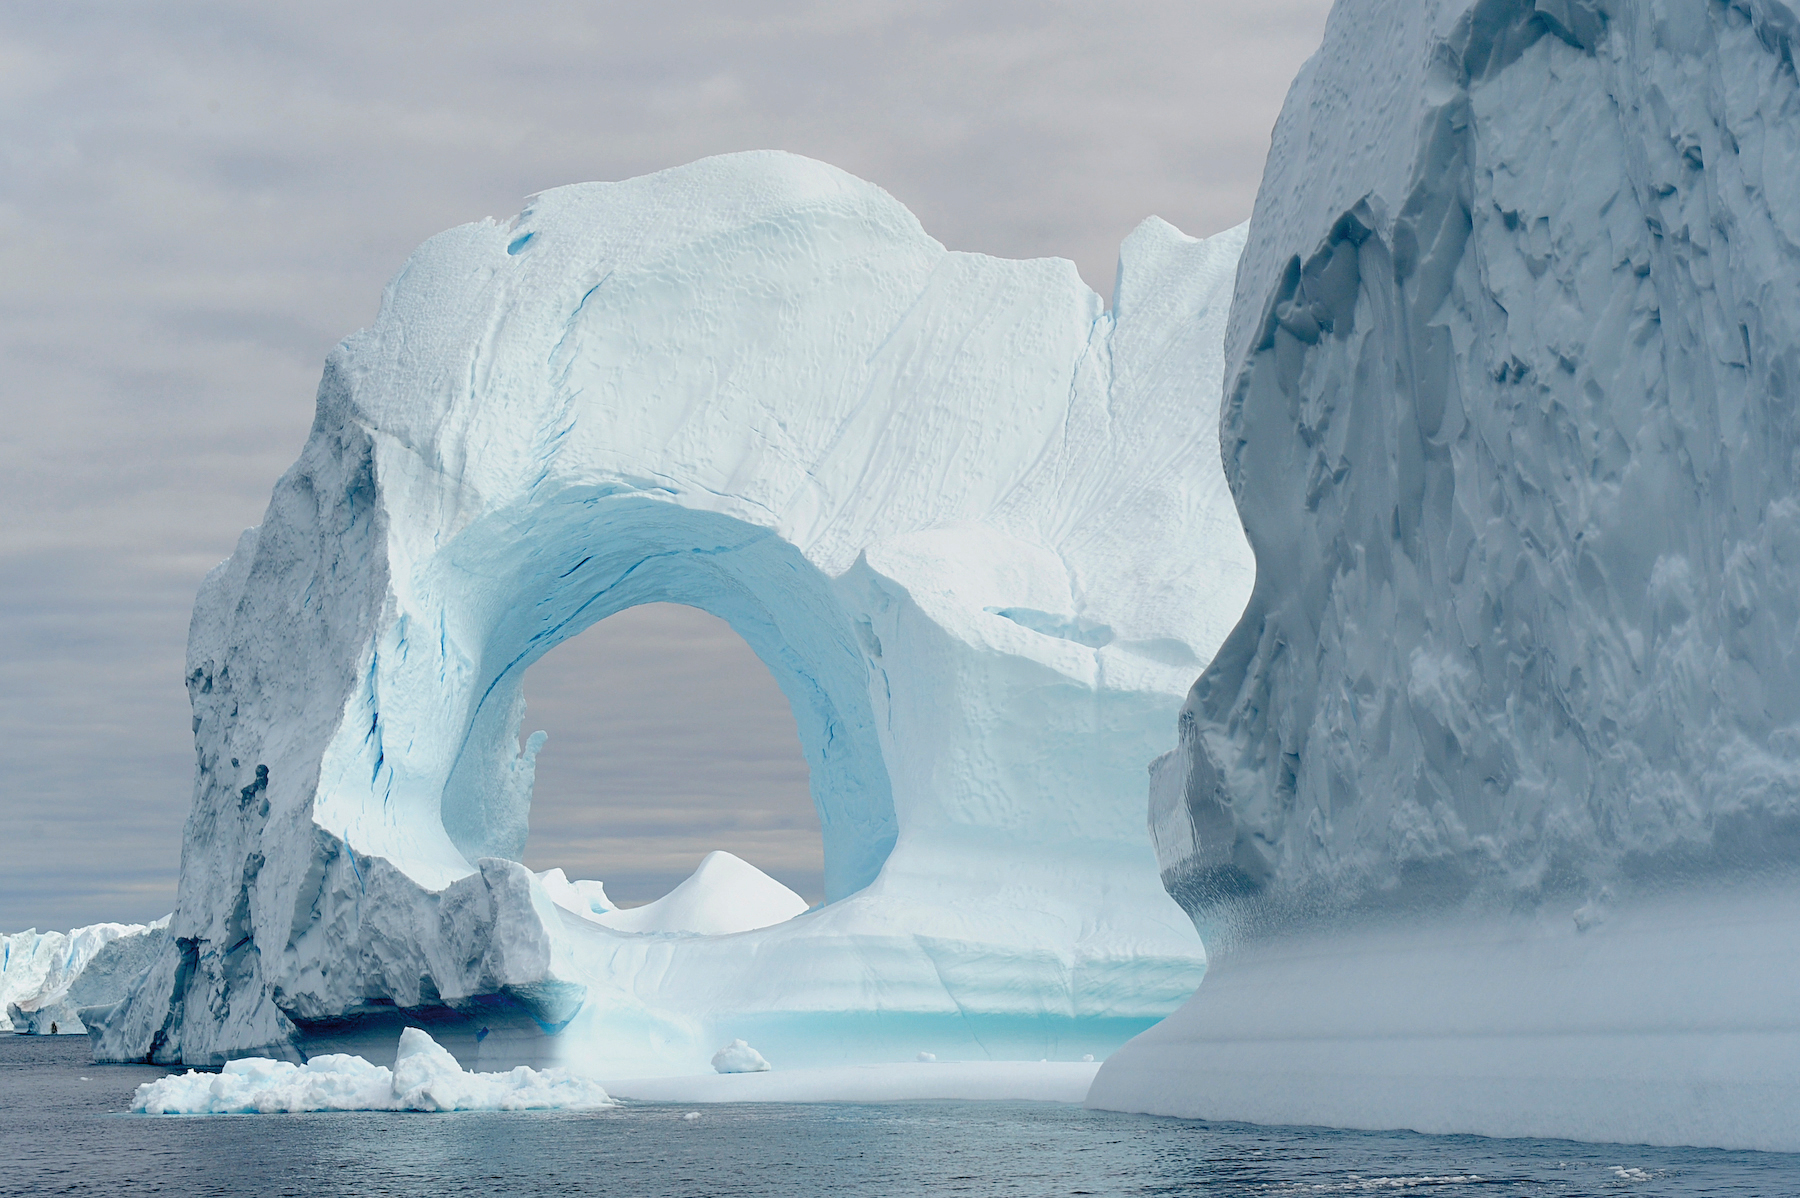 The Icebergs in Greenland's Disko Bay